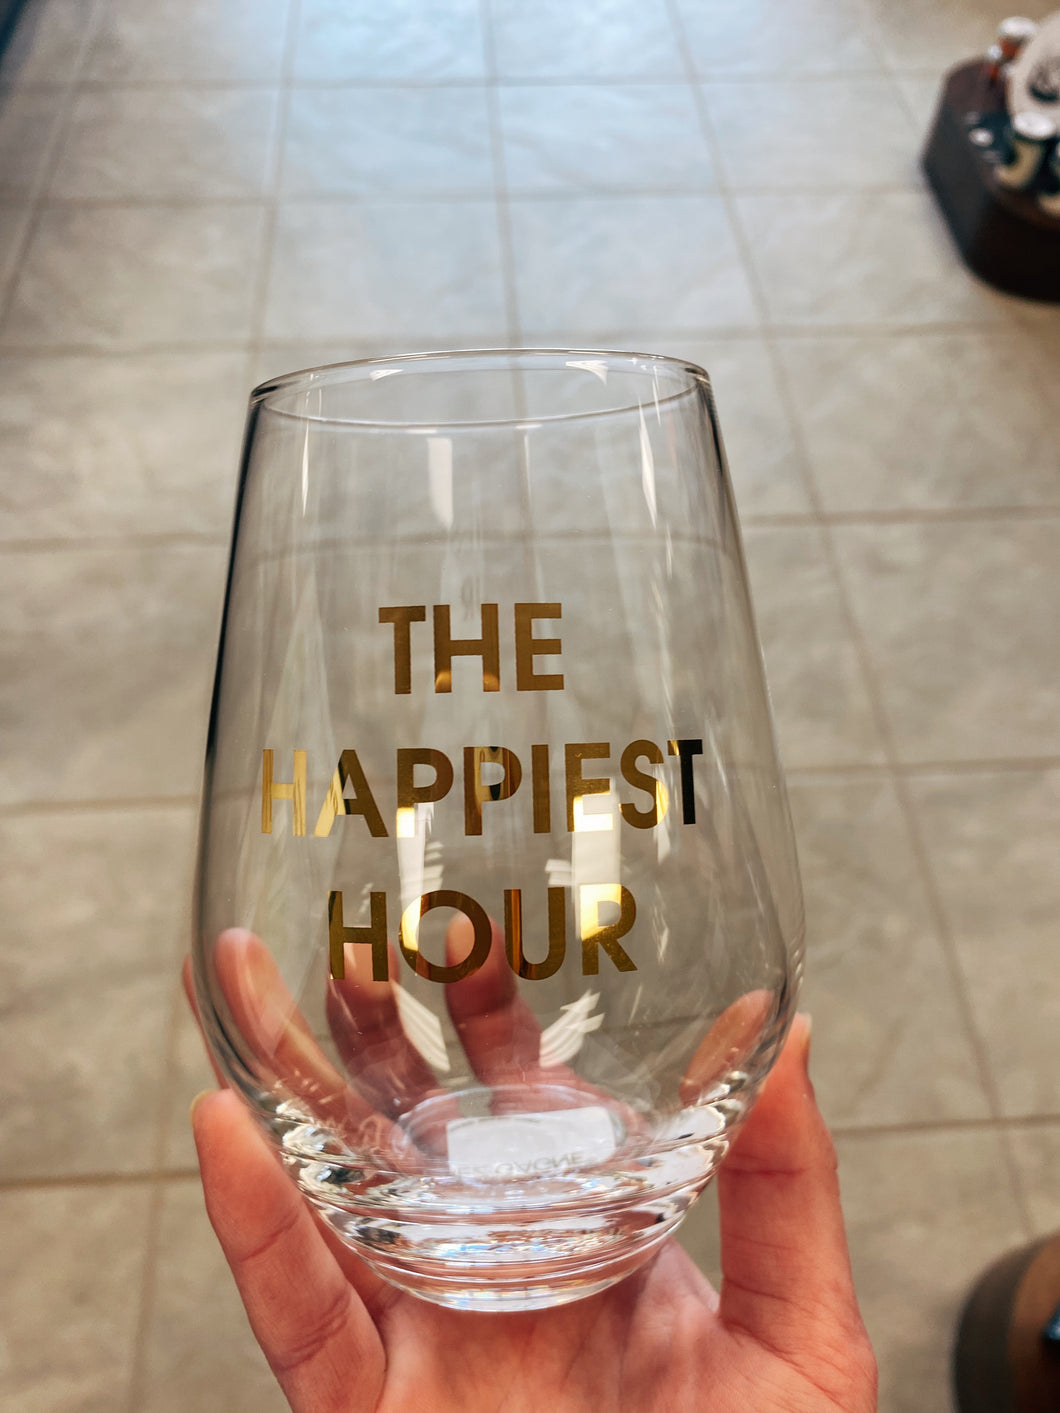 “The Happiest Hour” Wine Glass